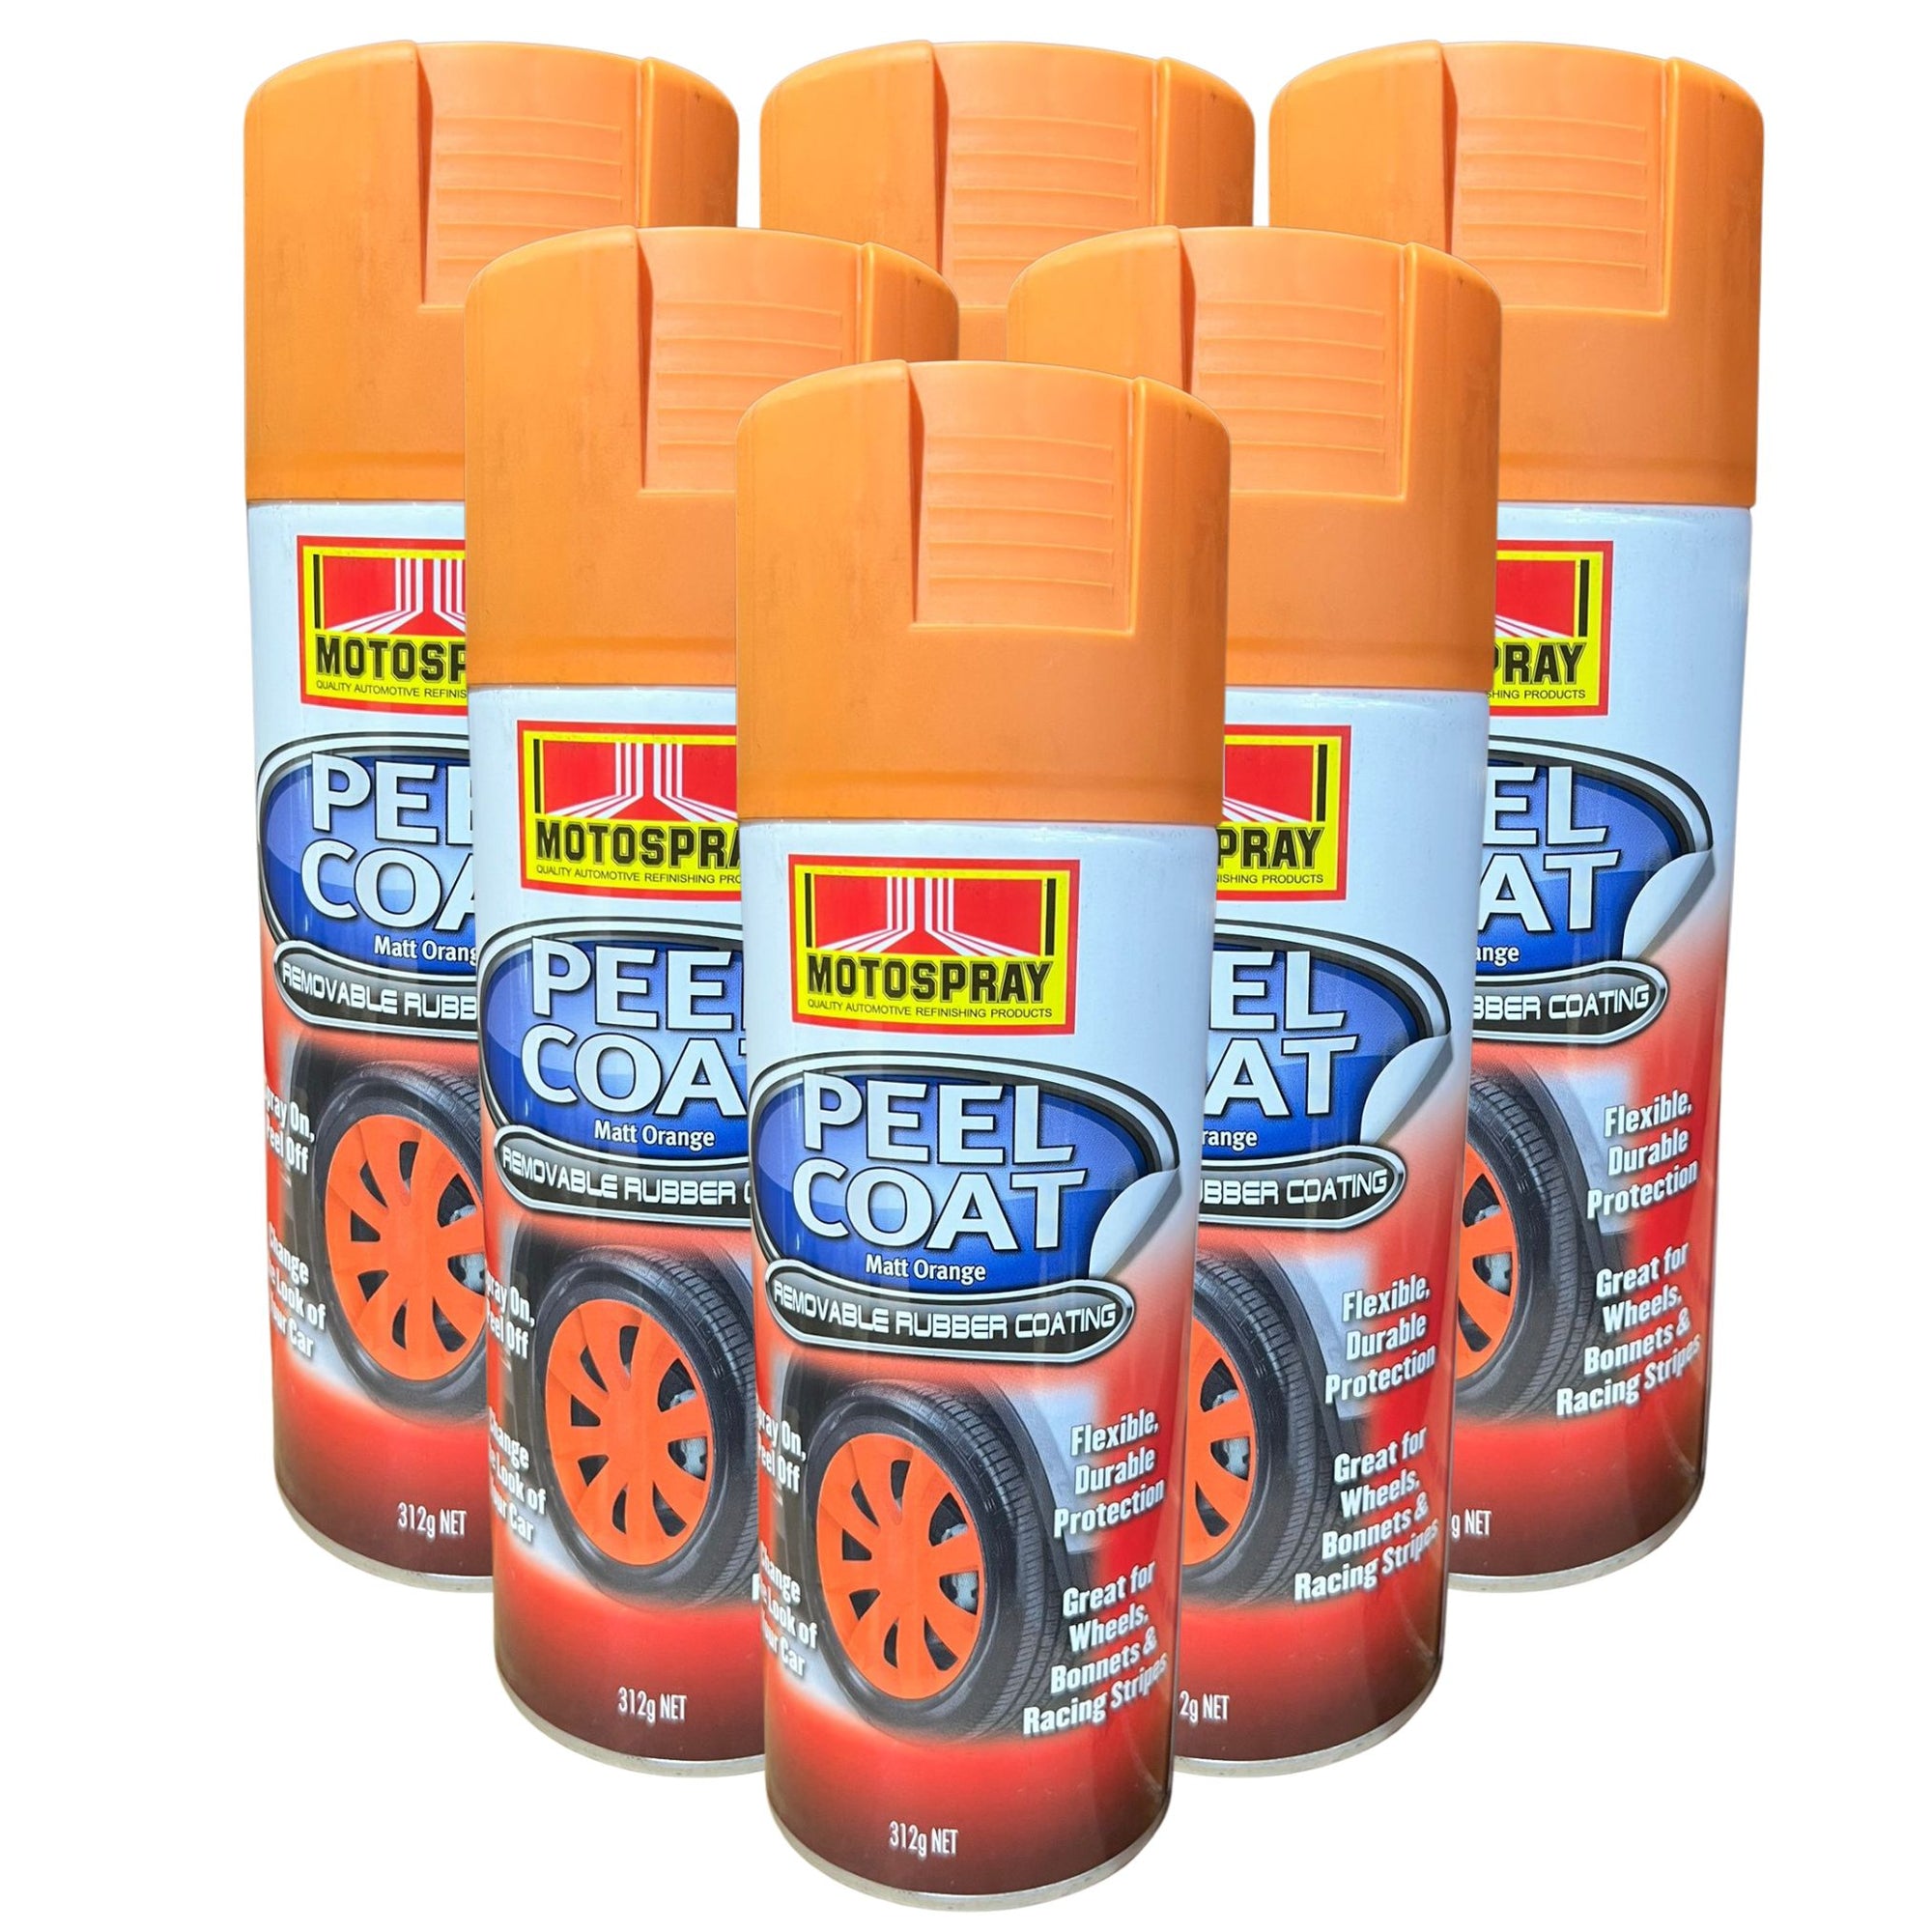 Motospray Peel Coat Rubberized Removable Coating - Matt Orange - 6 Pack - South East Clearance Centre